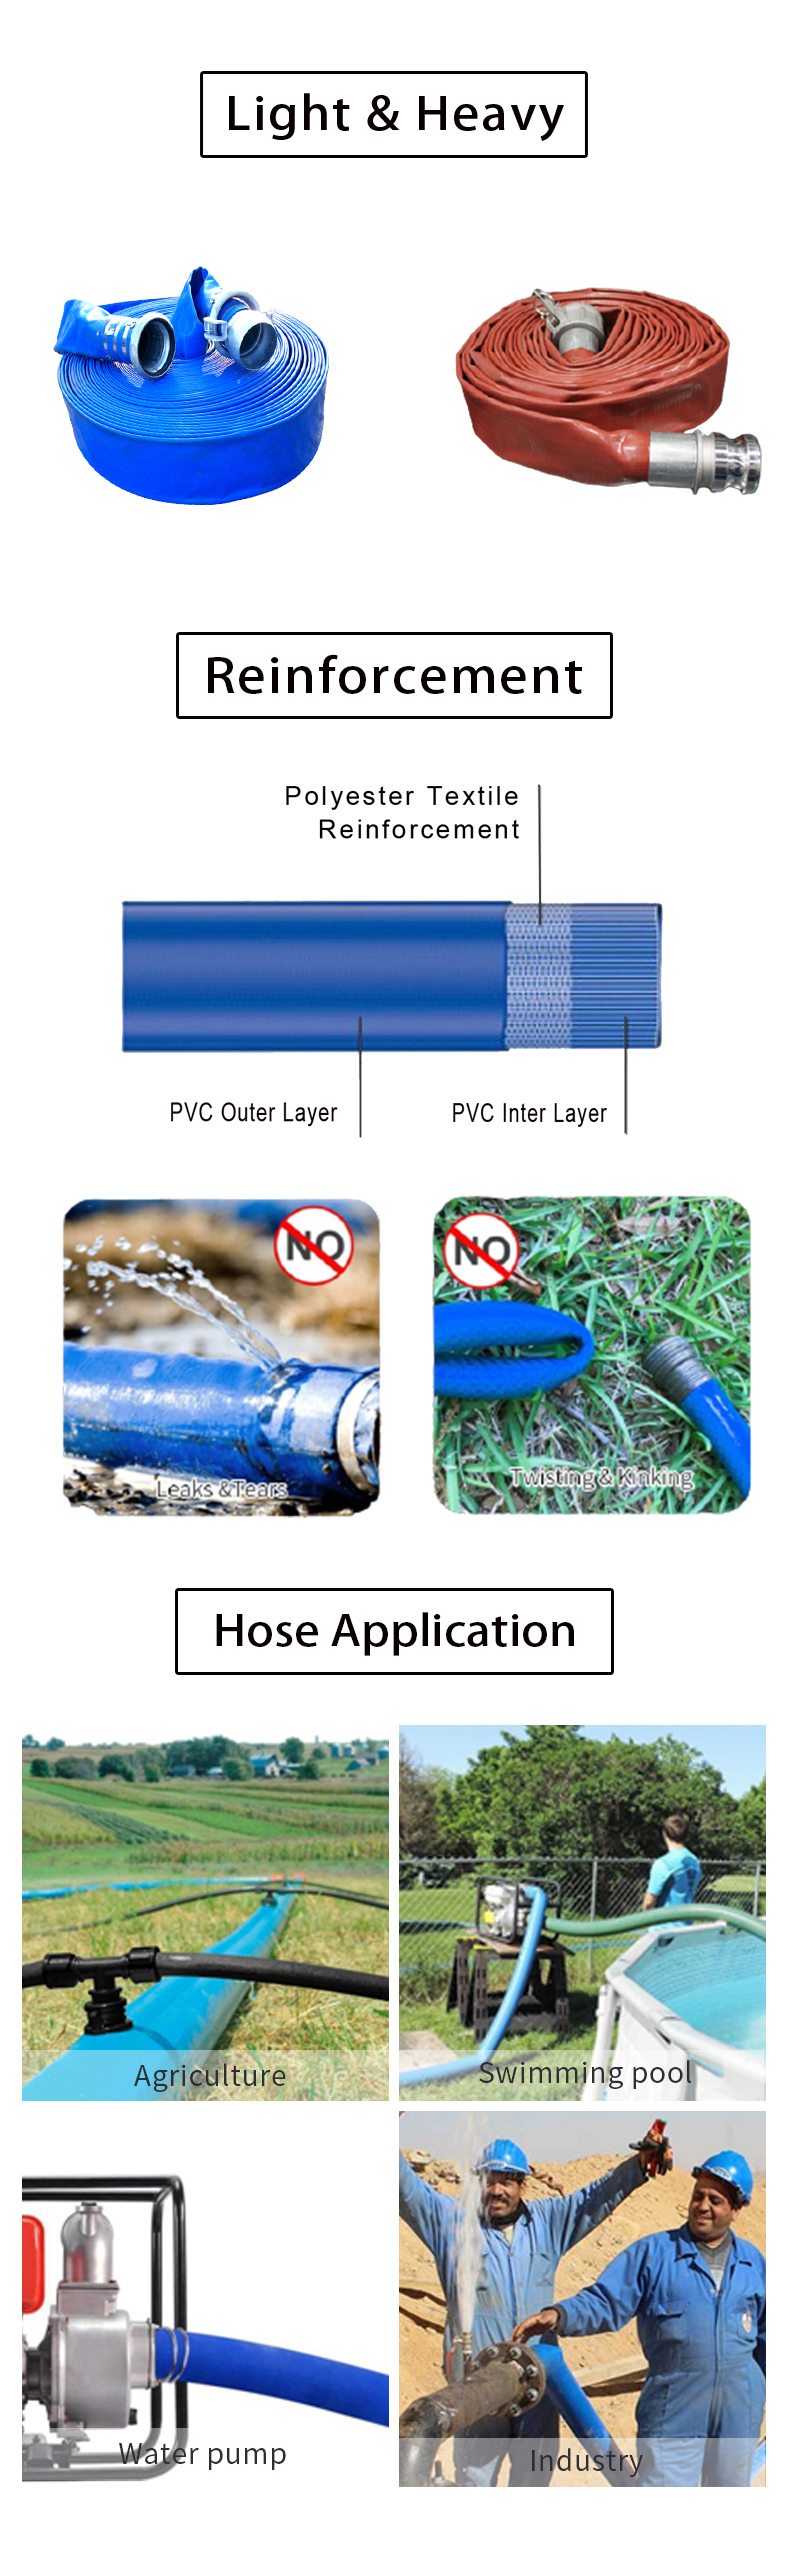 Industrial PVC lay flat hose